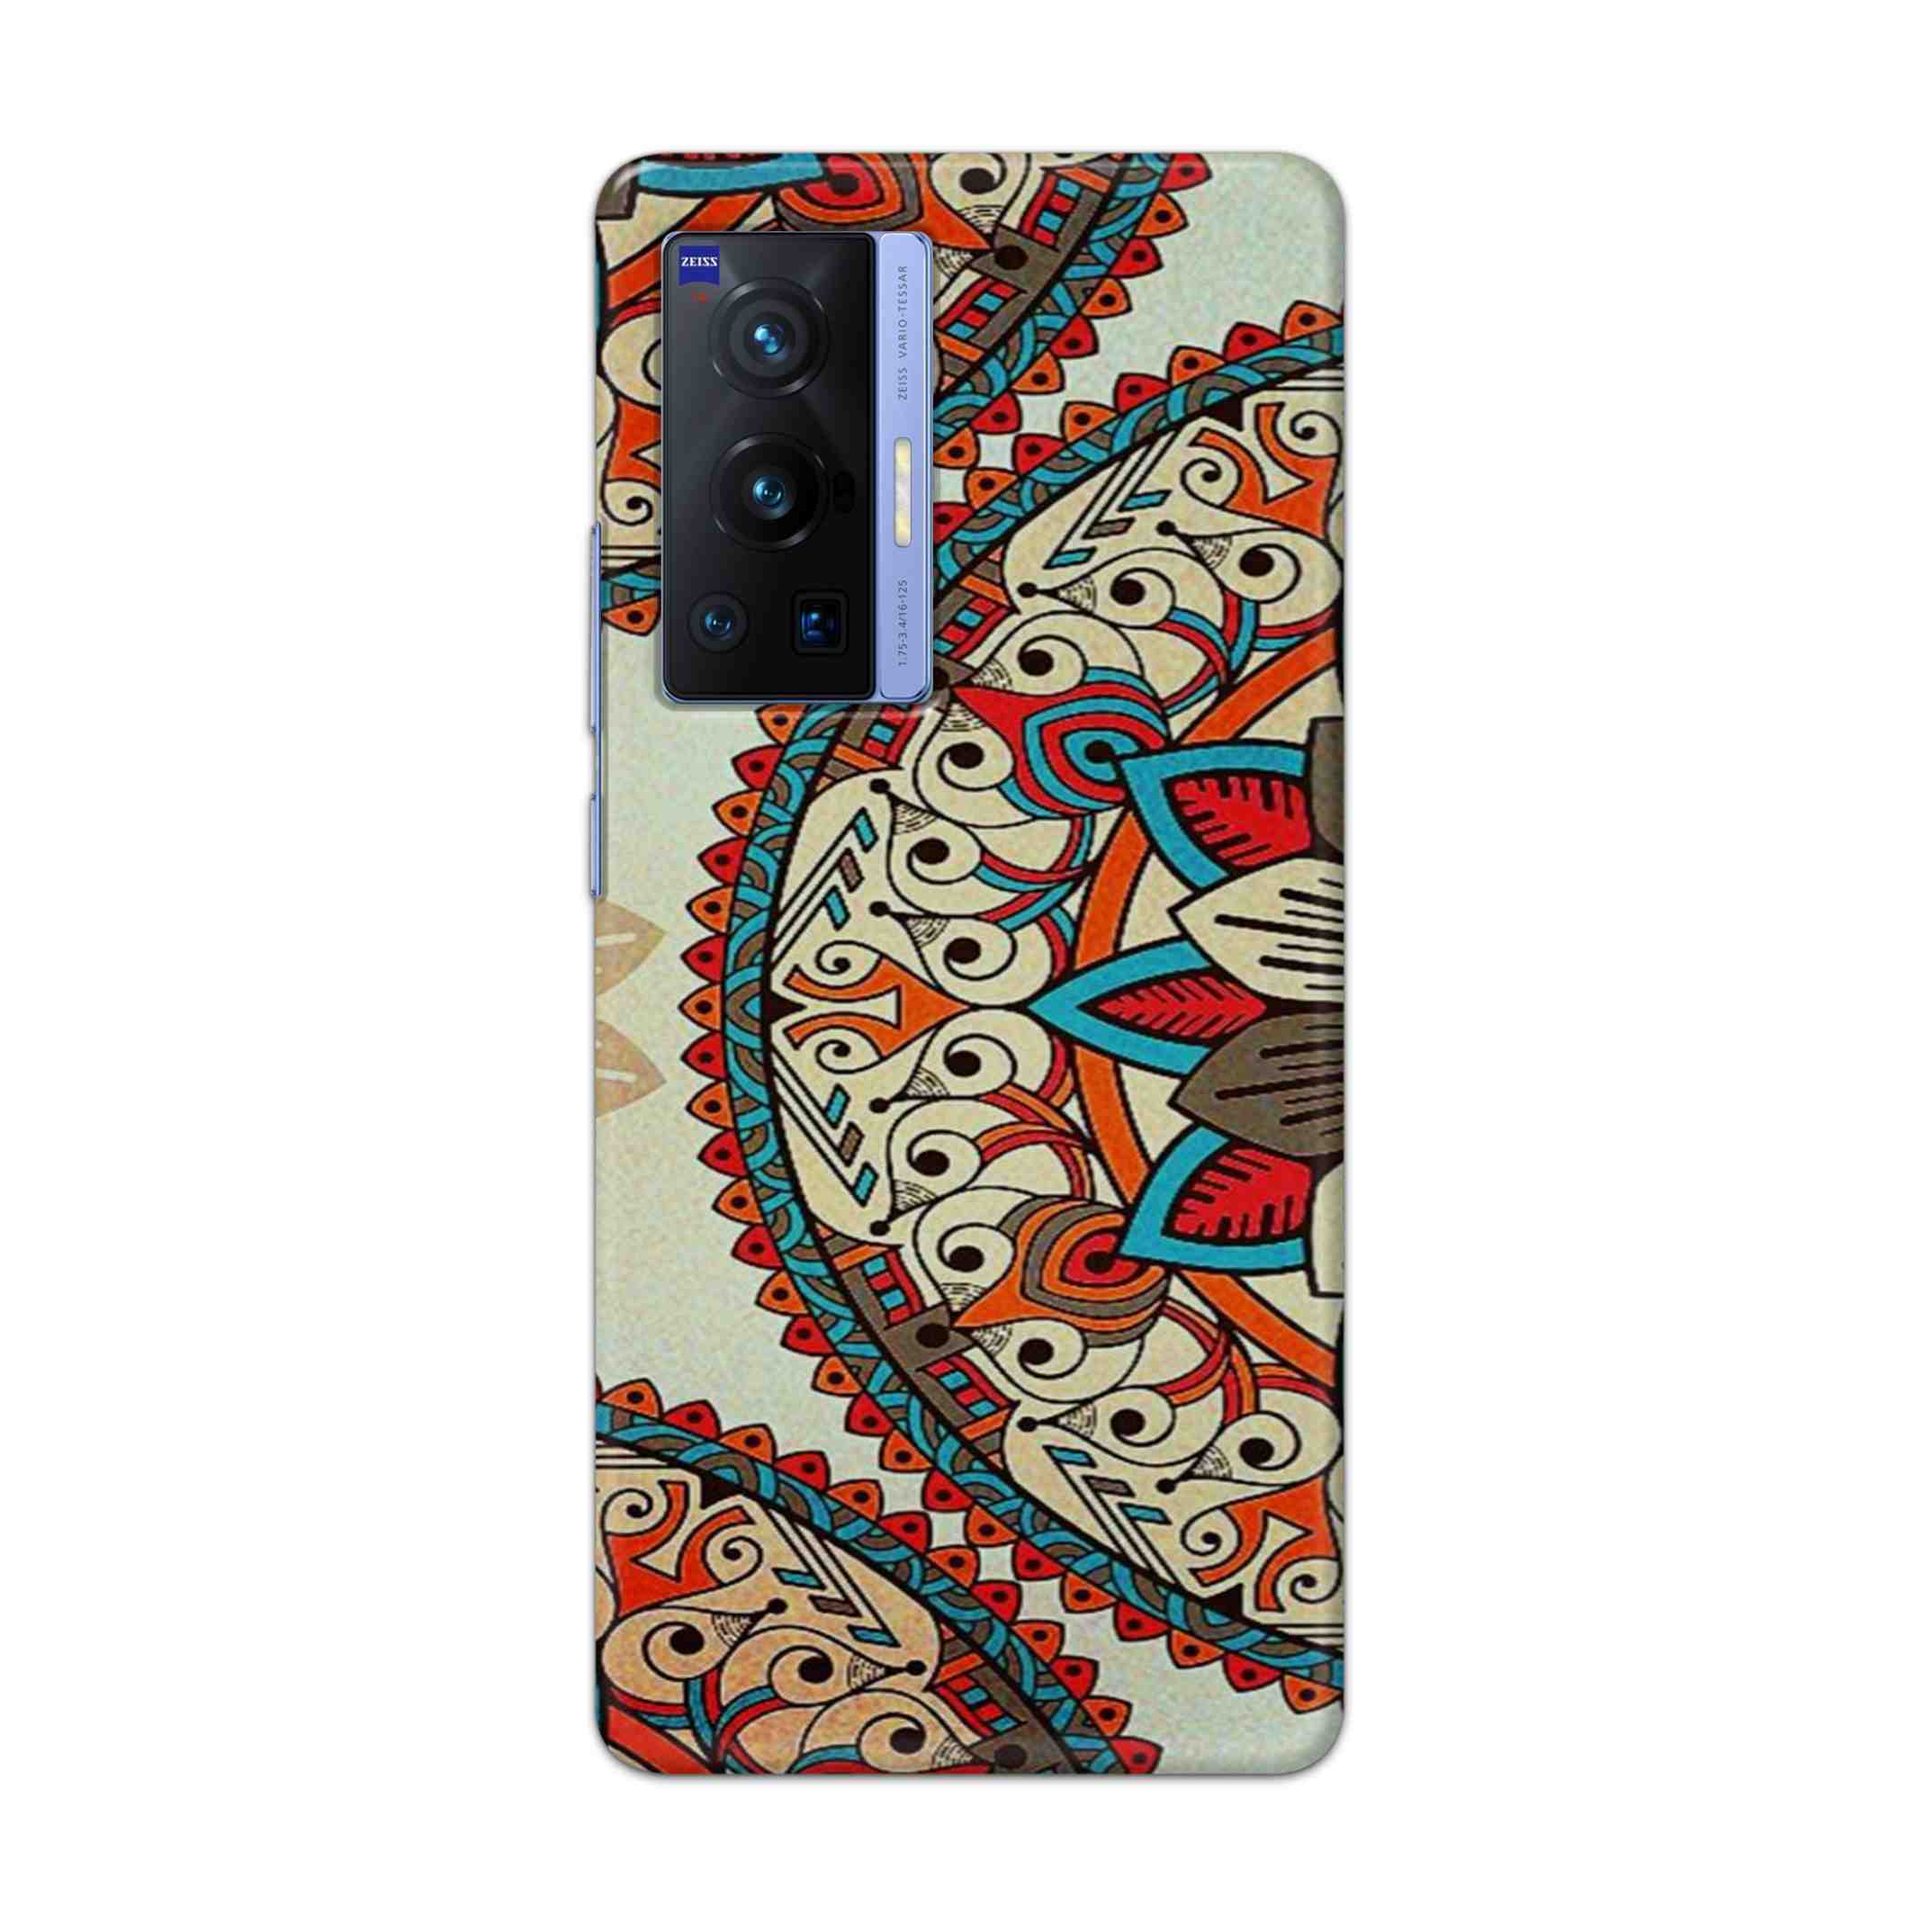 Buy Aztec Mandalas Hard Back Mobile Phone Case Cover For Vivo X70 Pro Online